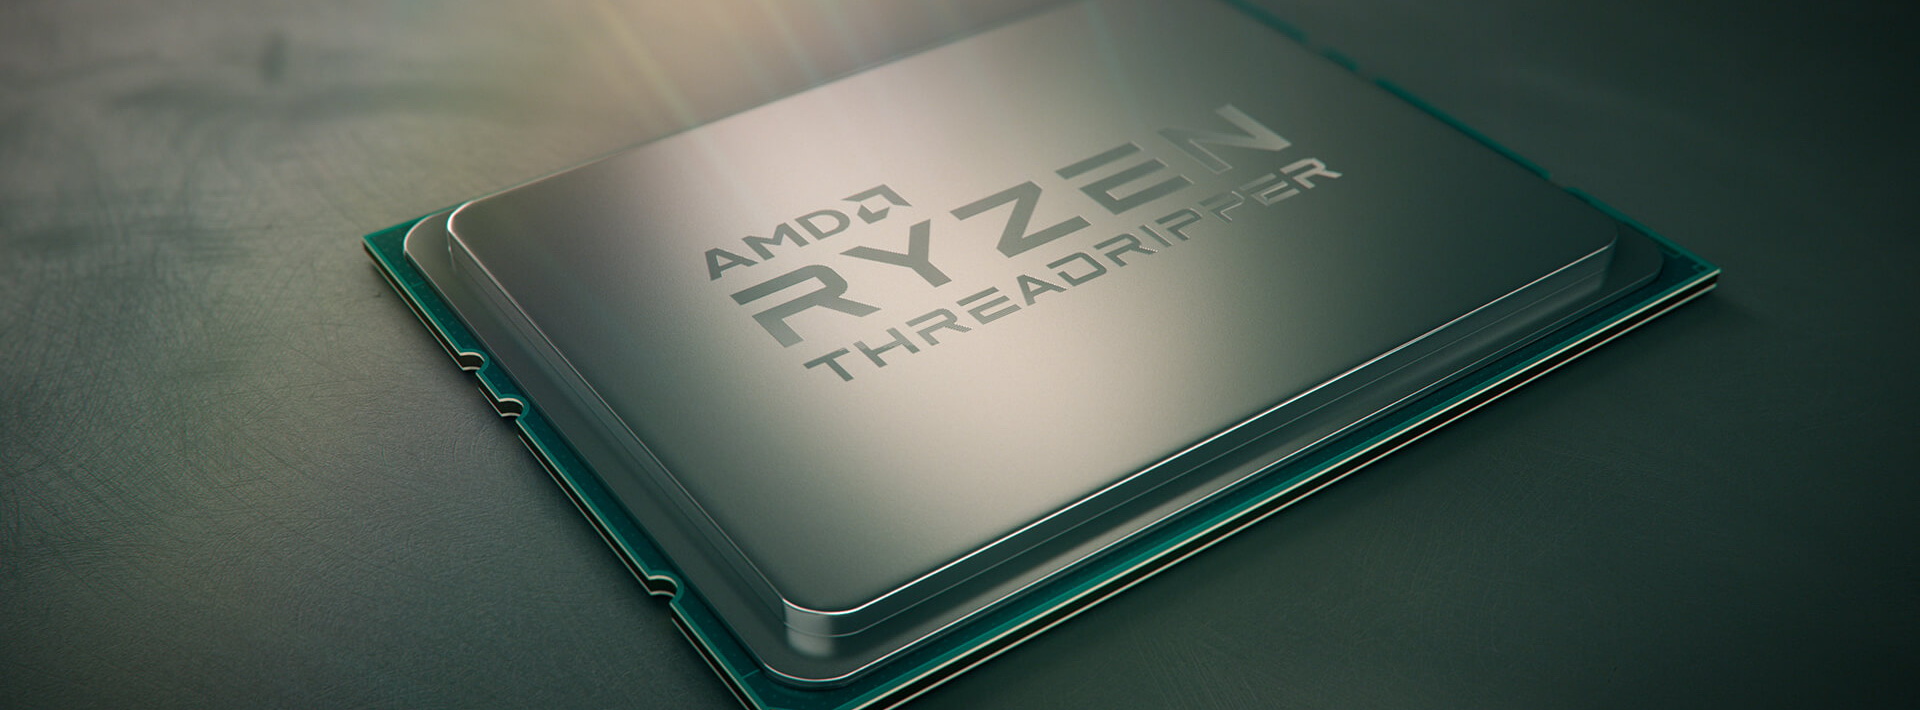 AMD chính thức bán Ryzen Threadripper 1900X, giá 549 USD